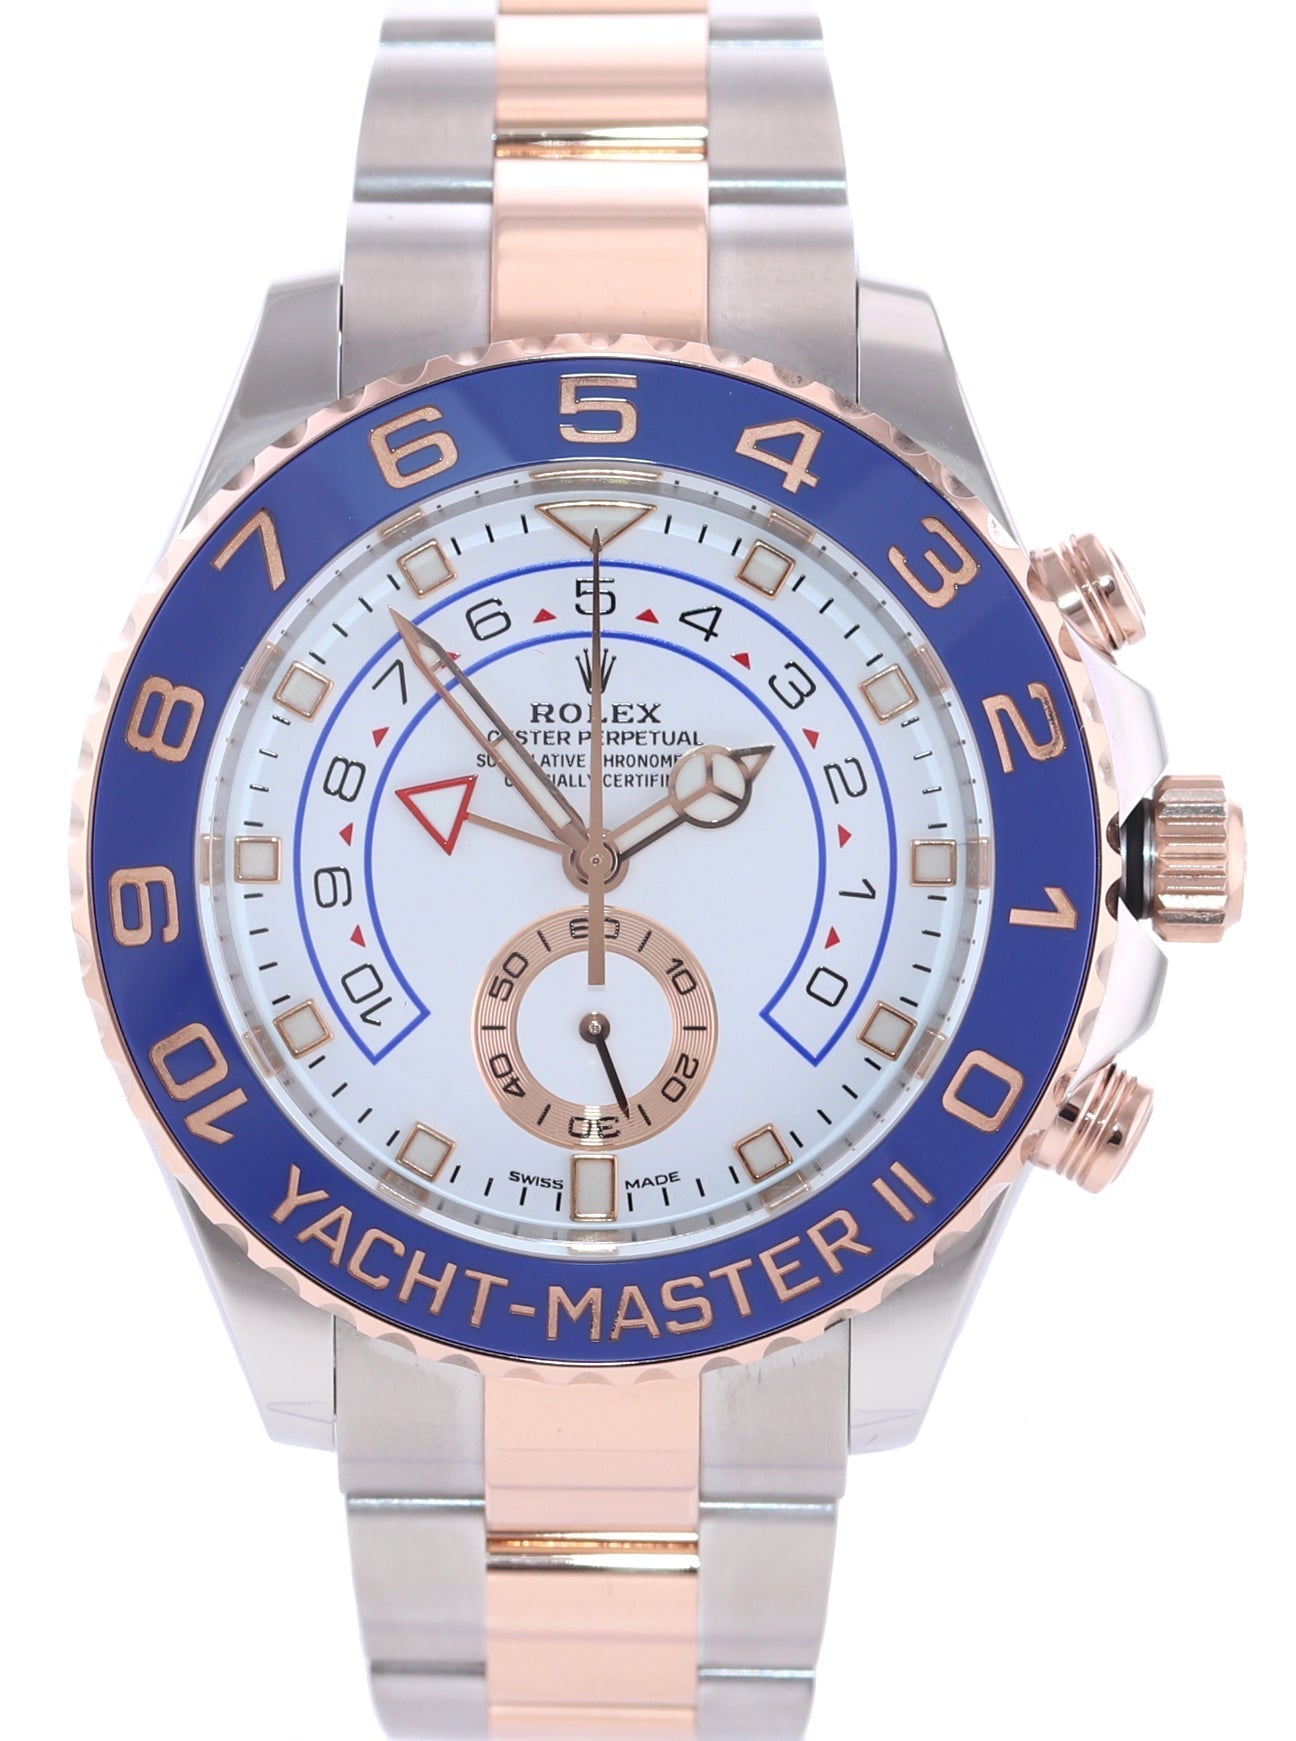 2018 PAPERS Rolex Yacht-Master II 116681 Steel Everose Gold Mercedes Hands Watch Box